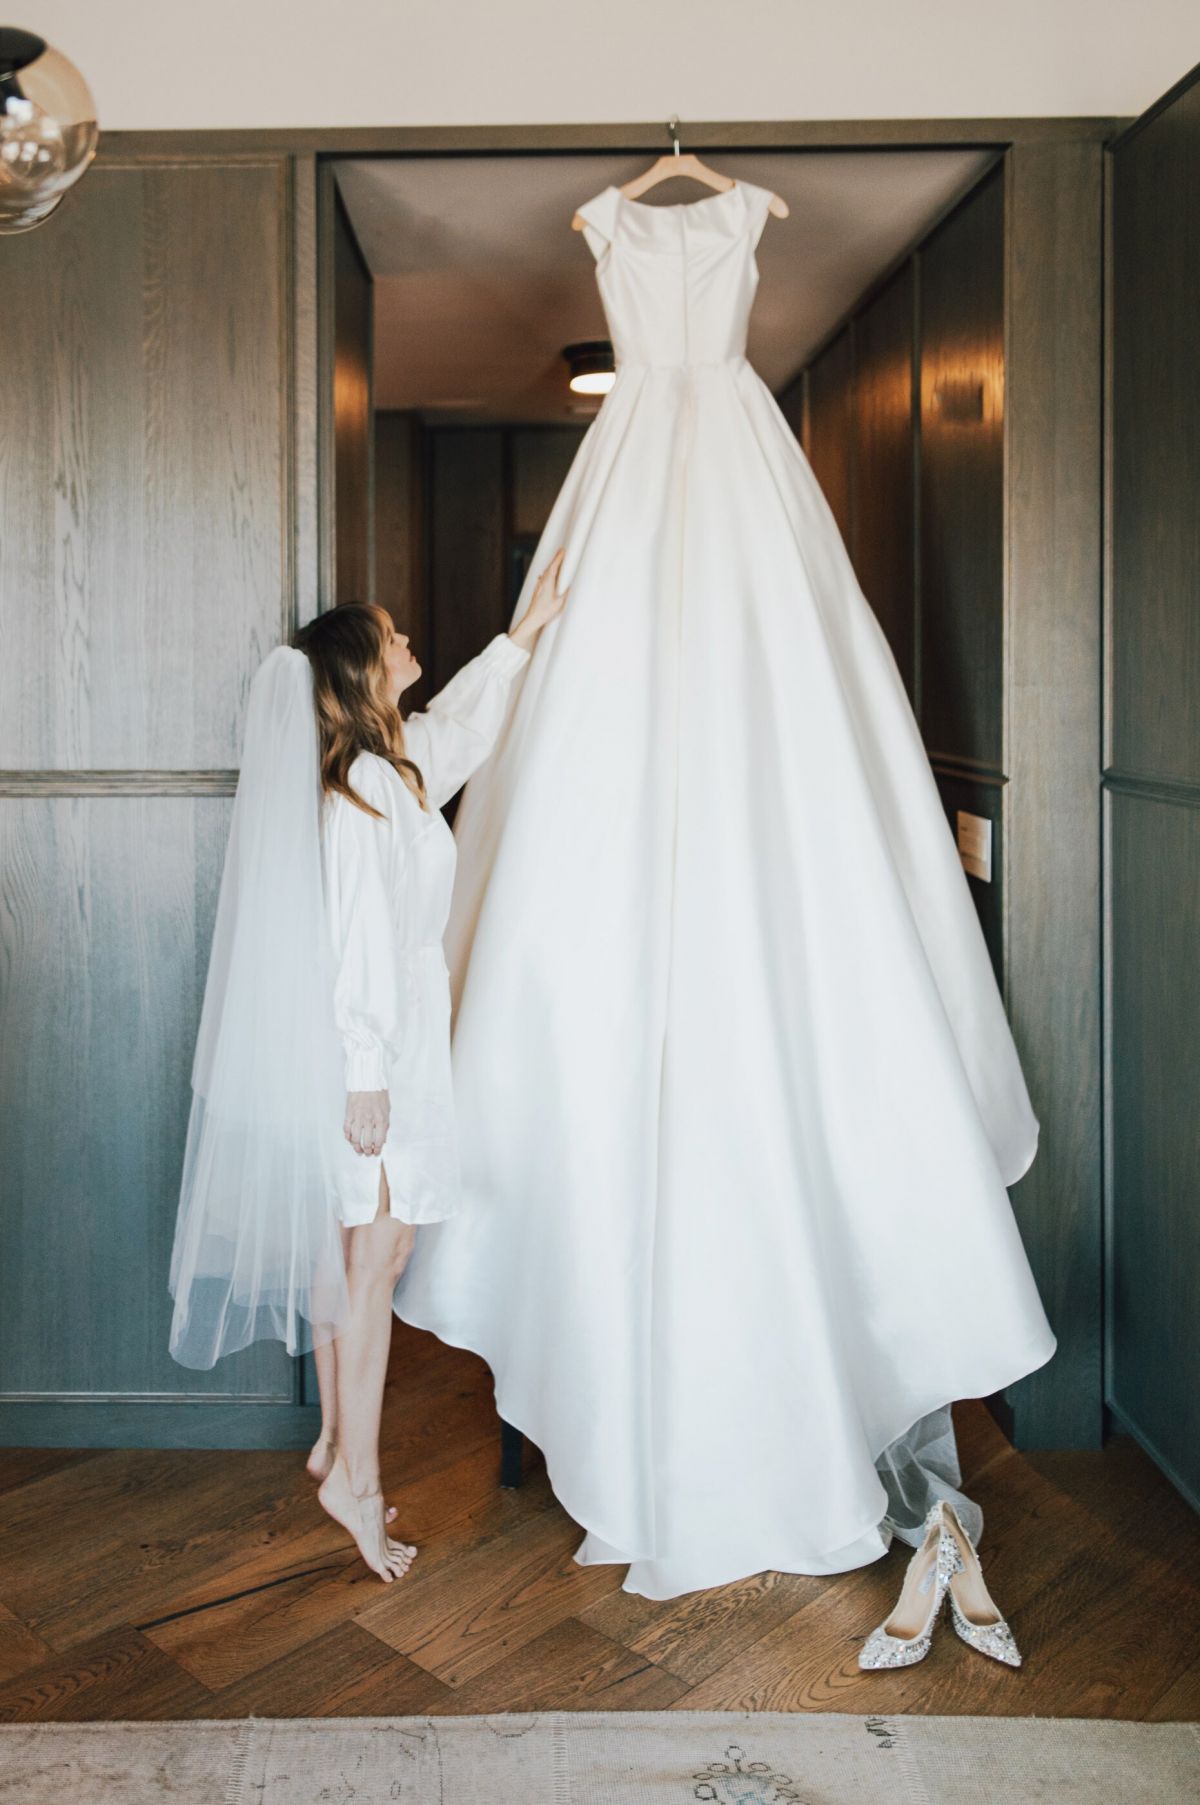 DEBBY RYAN – Wedding Photos for Vogue Magazine 05/31/2020 – HawtCelebs